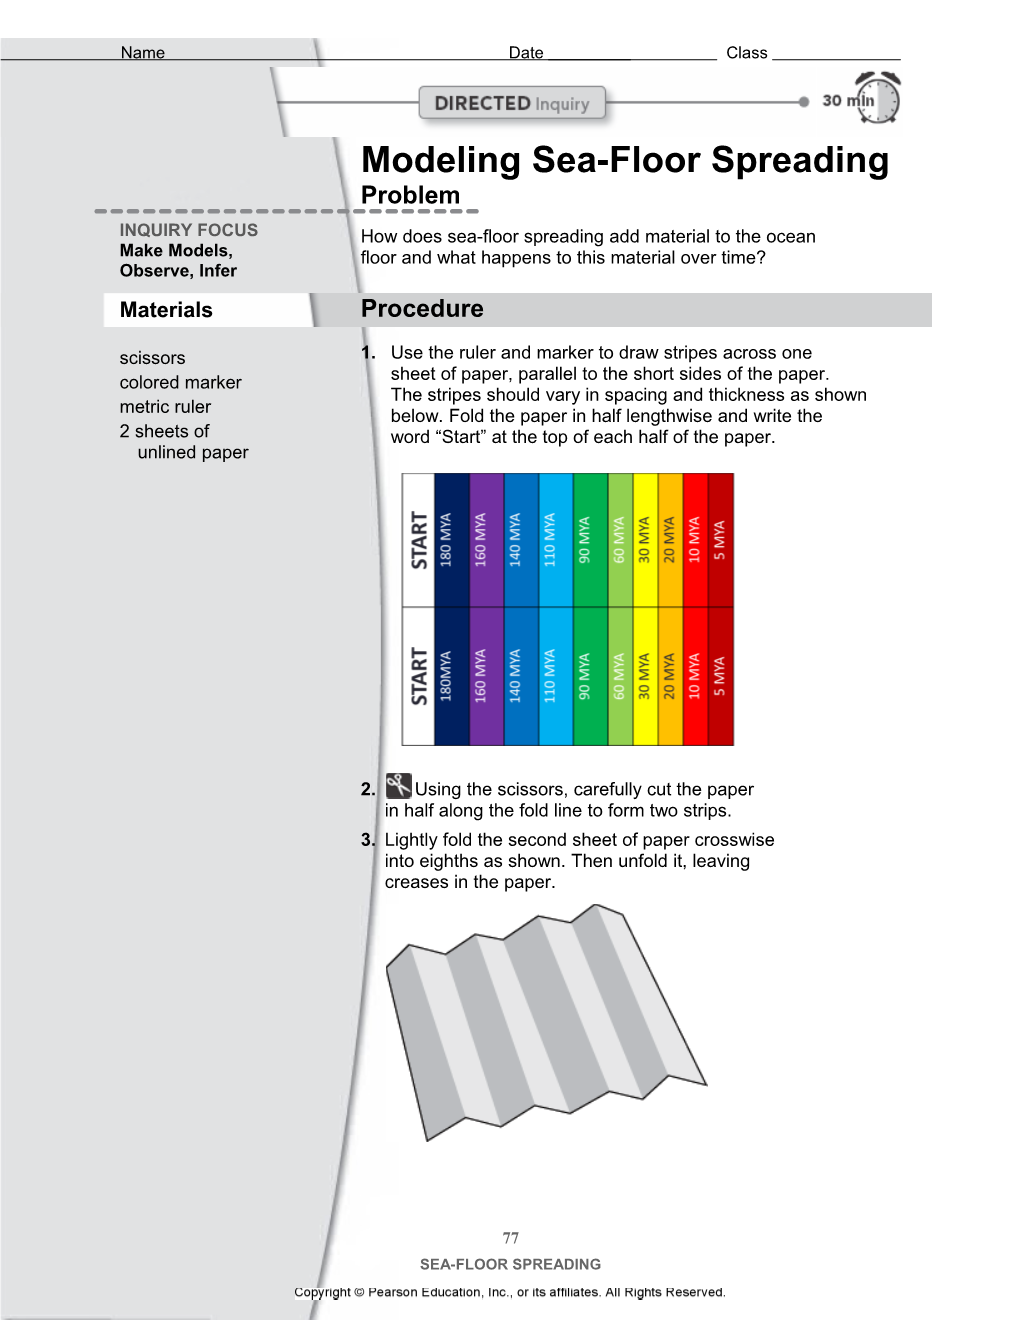 Modeling Sea-Floor Spreading